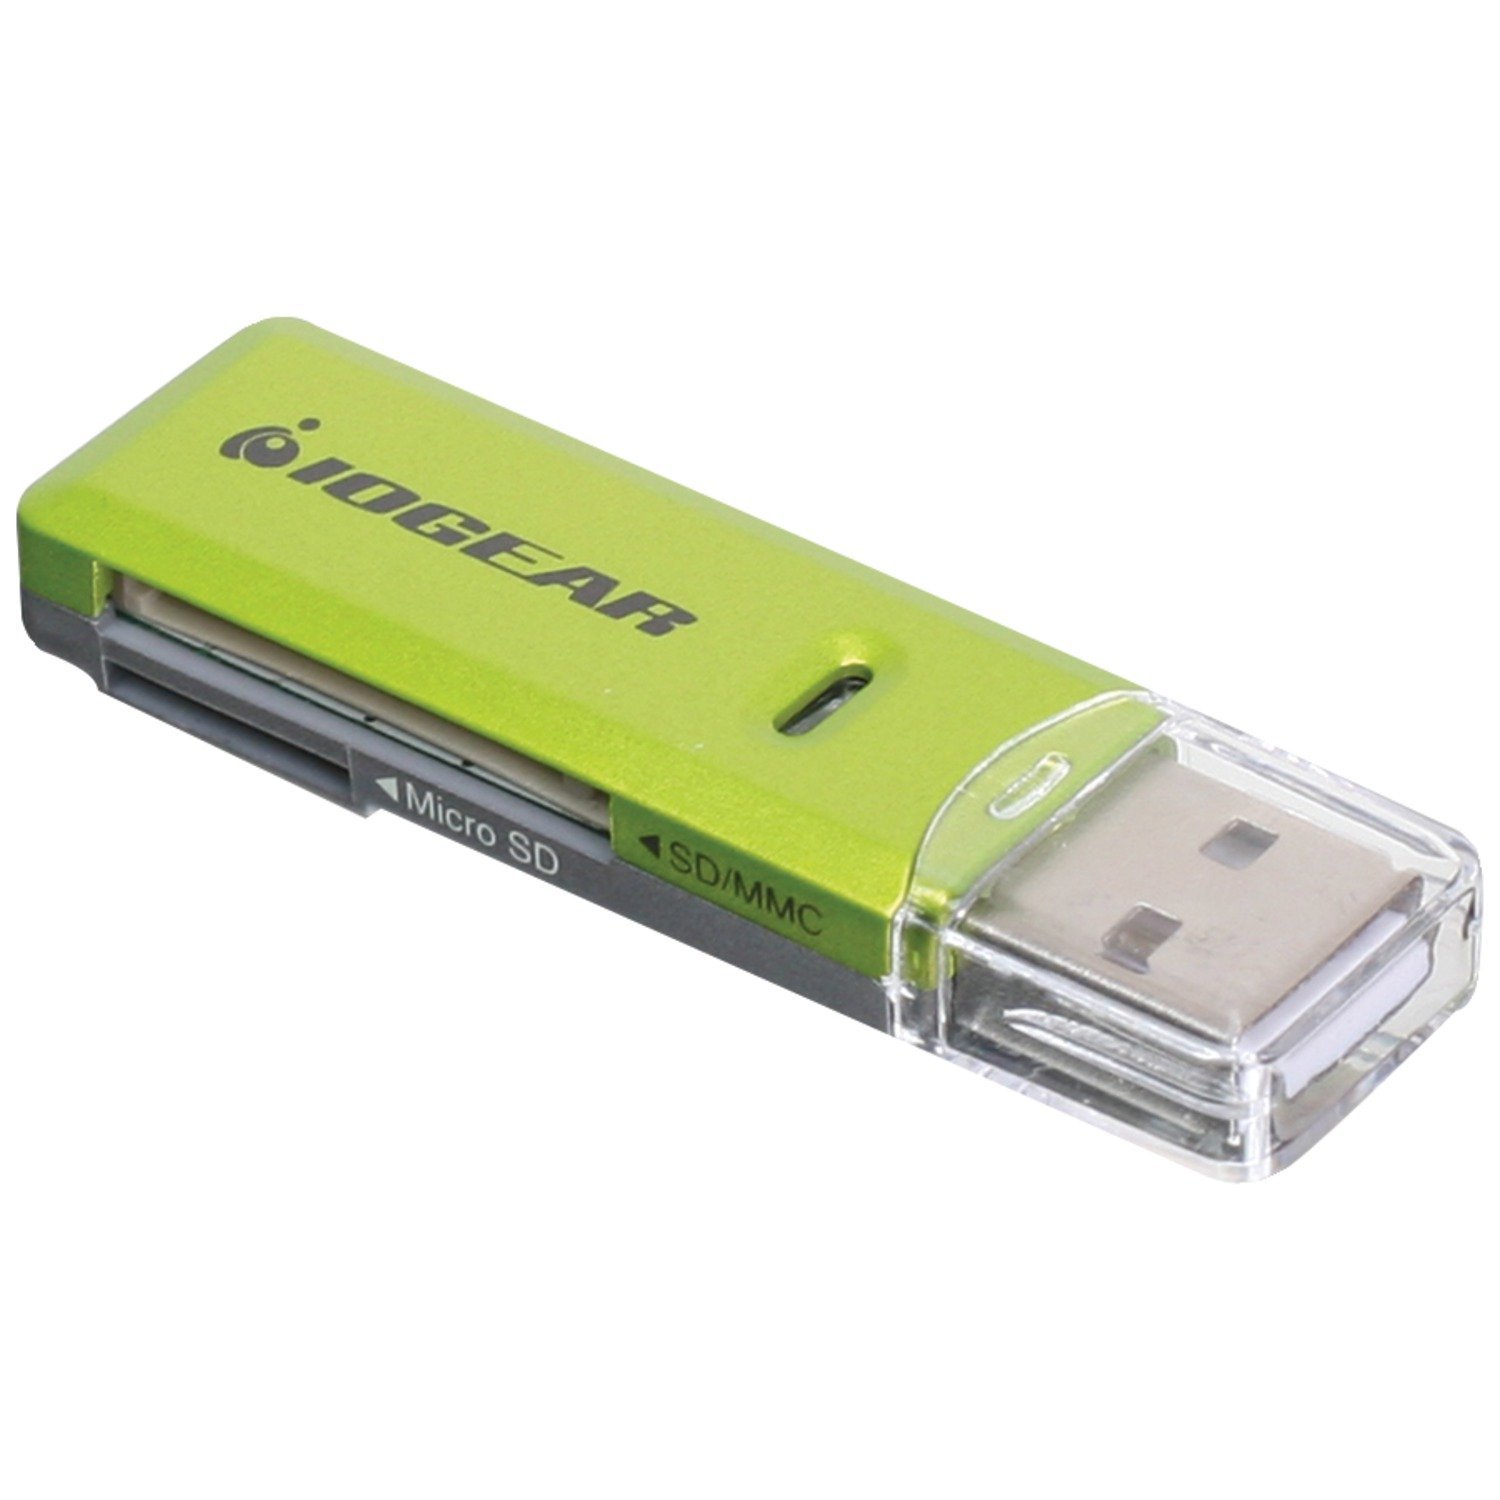 Commissie Eerlijkheid Verward USB Memory Card Reader | Advantage Software